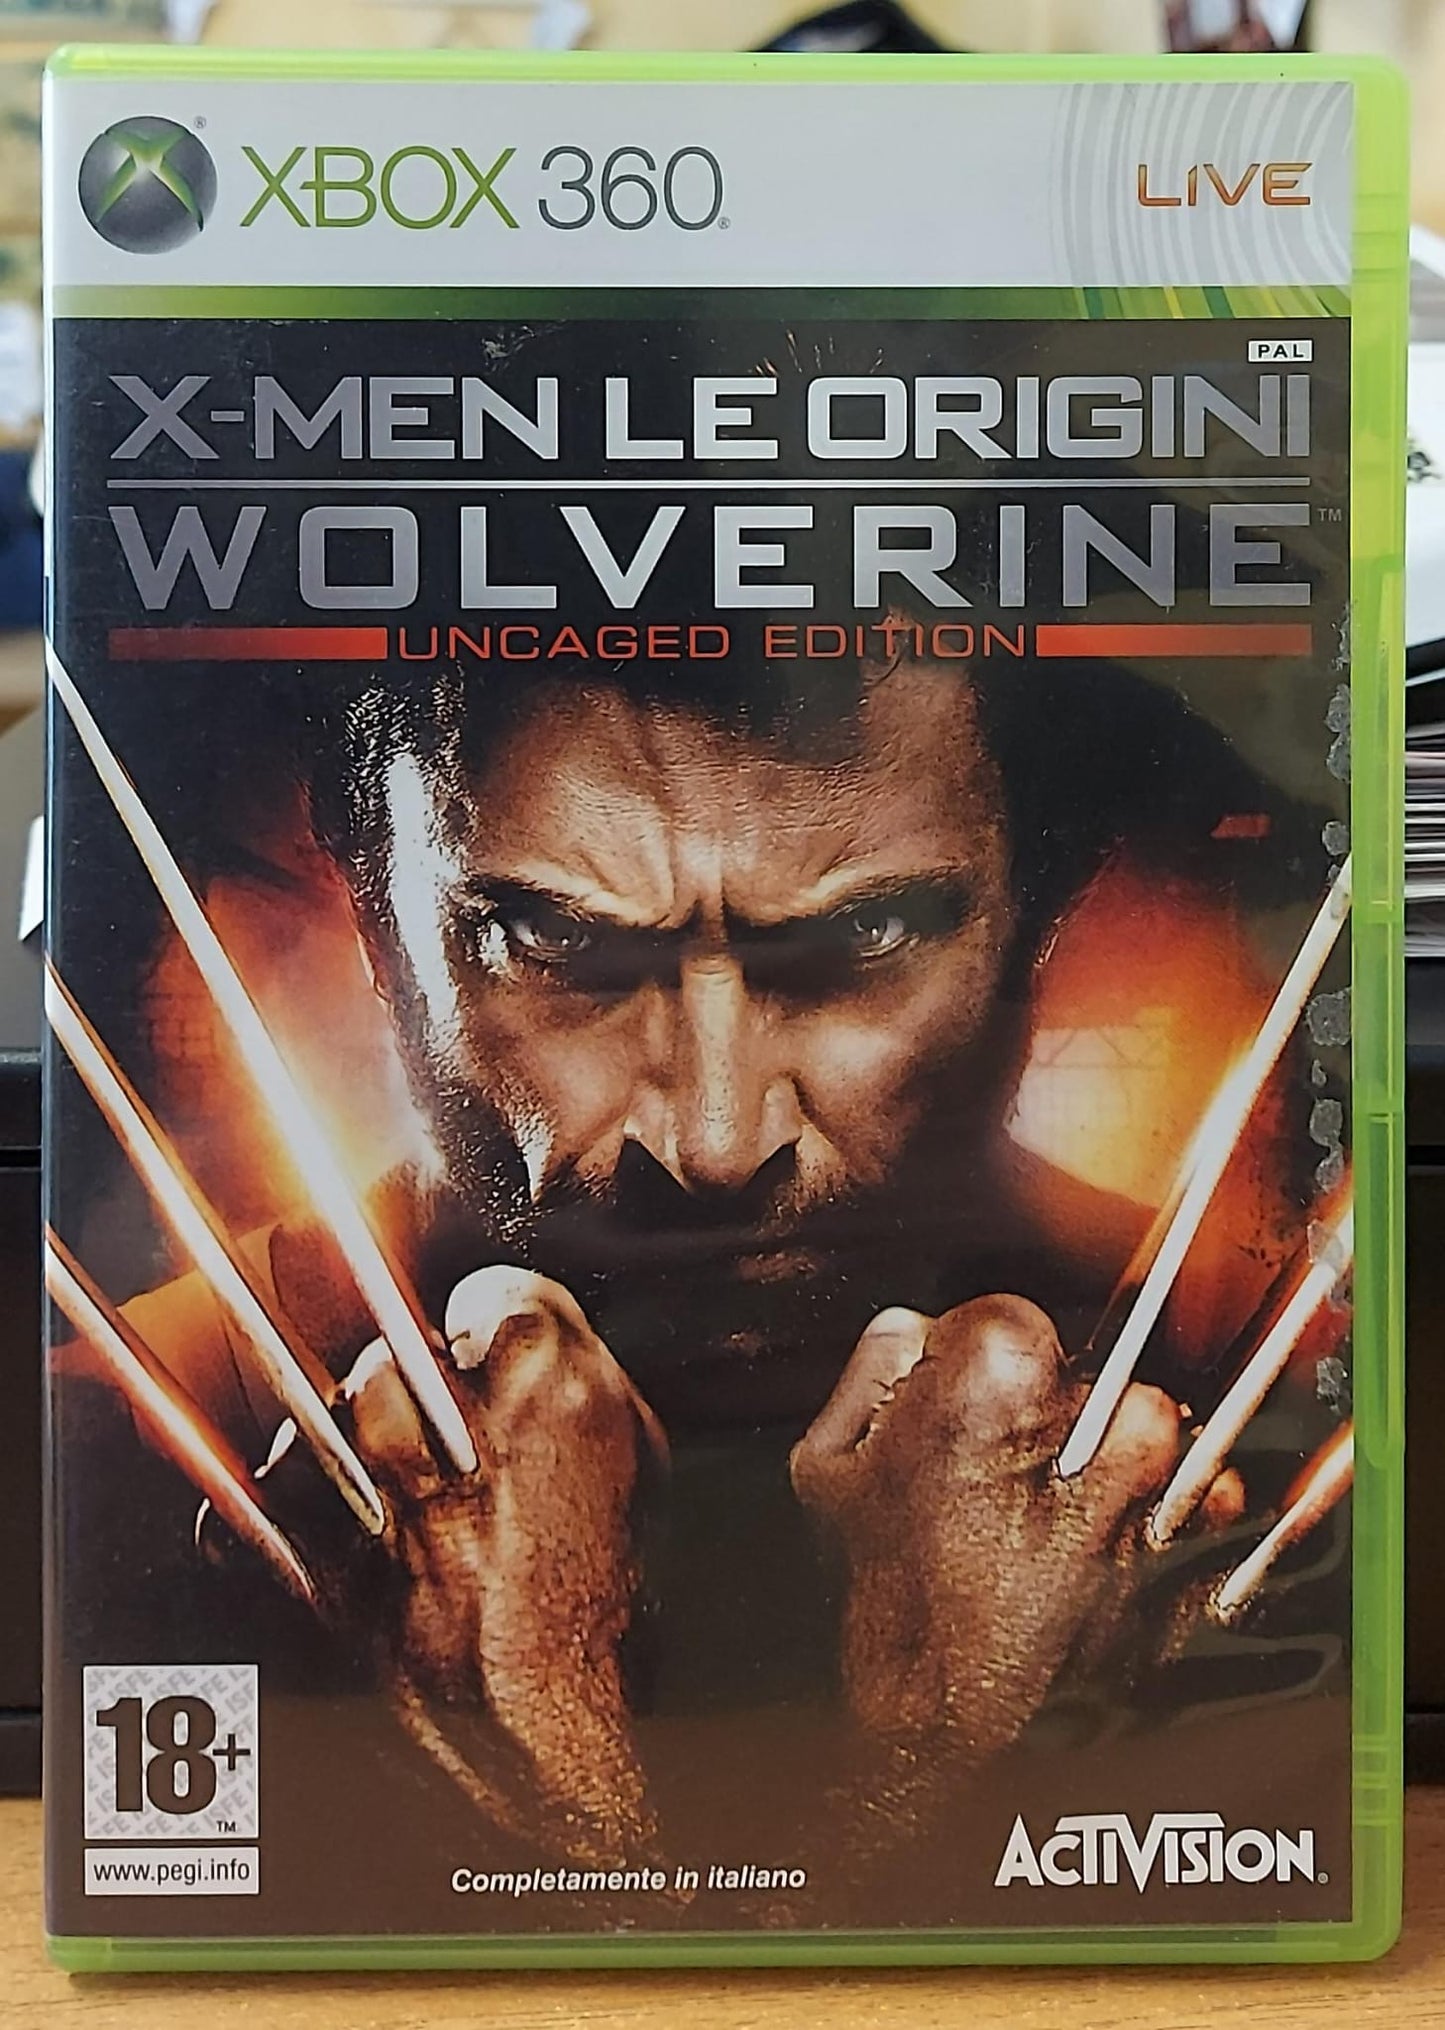 X-MEN LE ORIGINI WOLVERINE UNCAGED EDITION